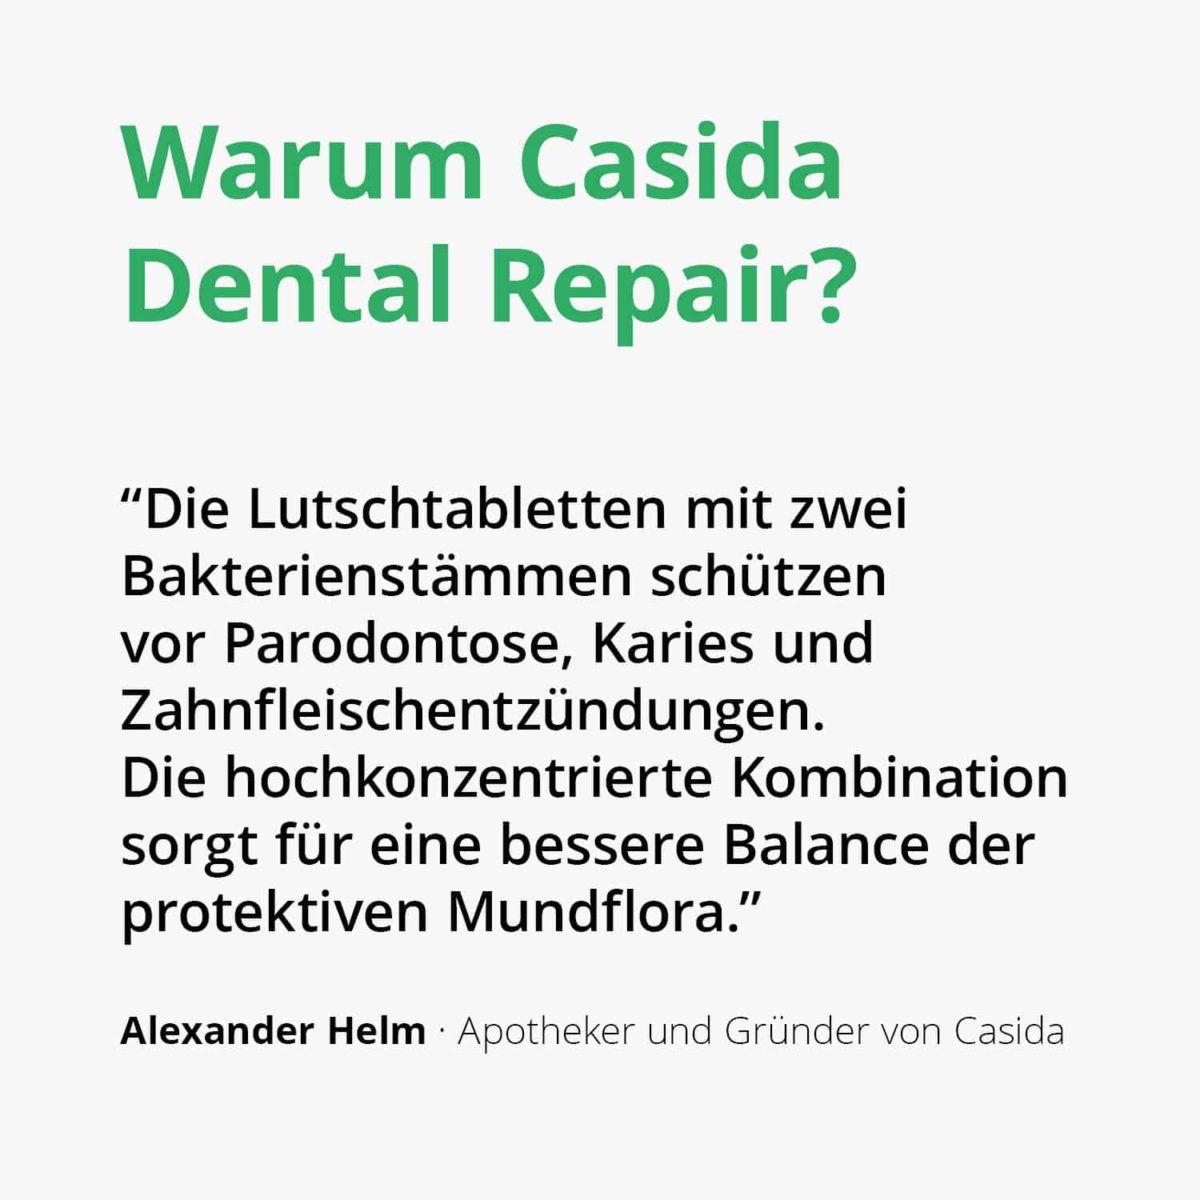 Casida Dental Repair Lutschtabletten – 60 Stk. 14401553 PZN Apotheke Karies Zahnpflege Parodontose2